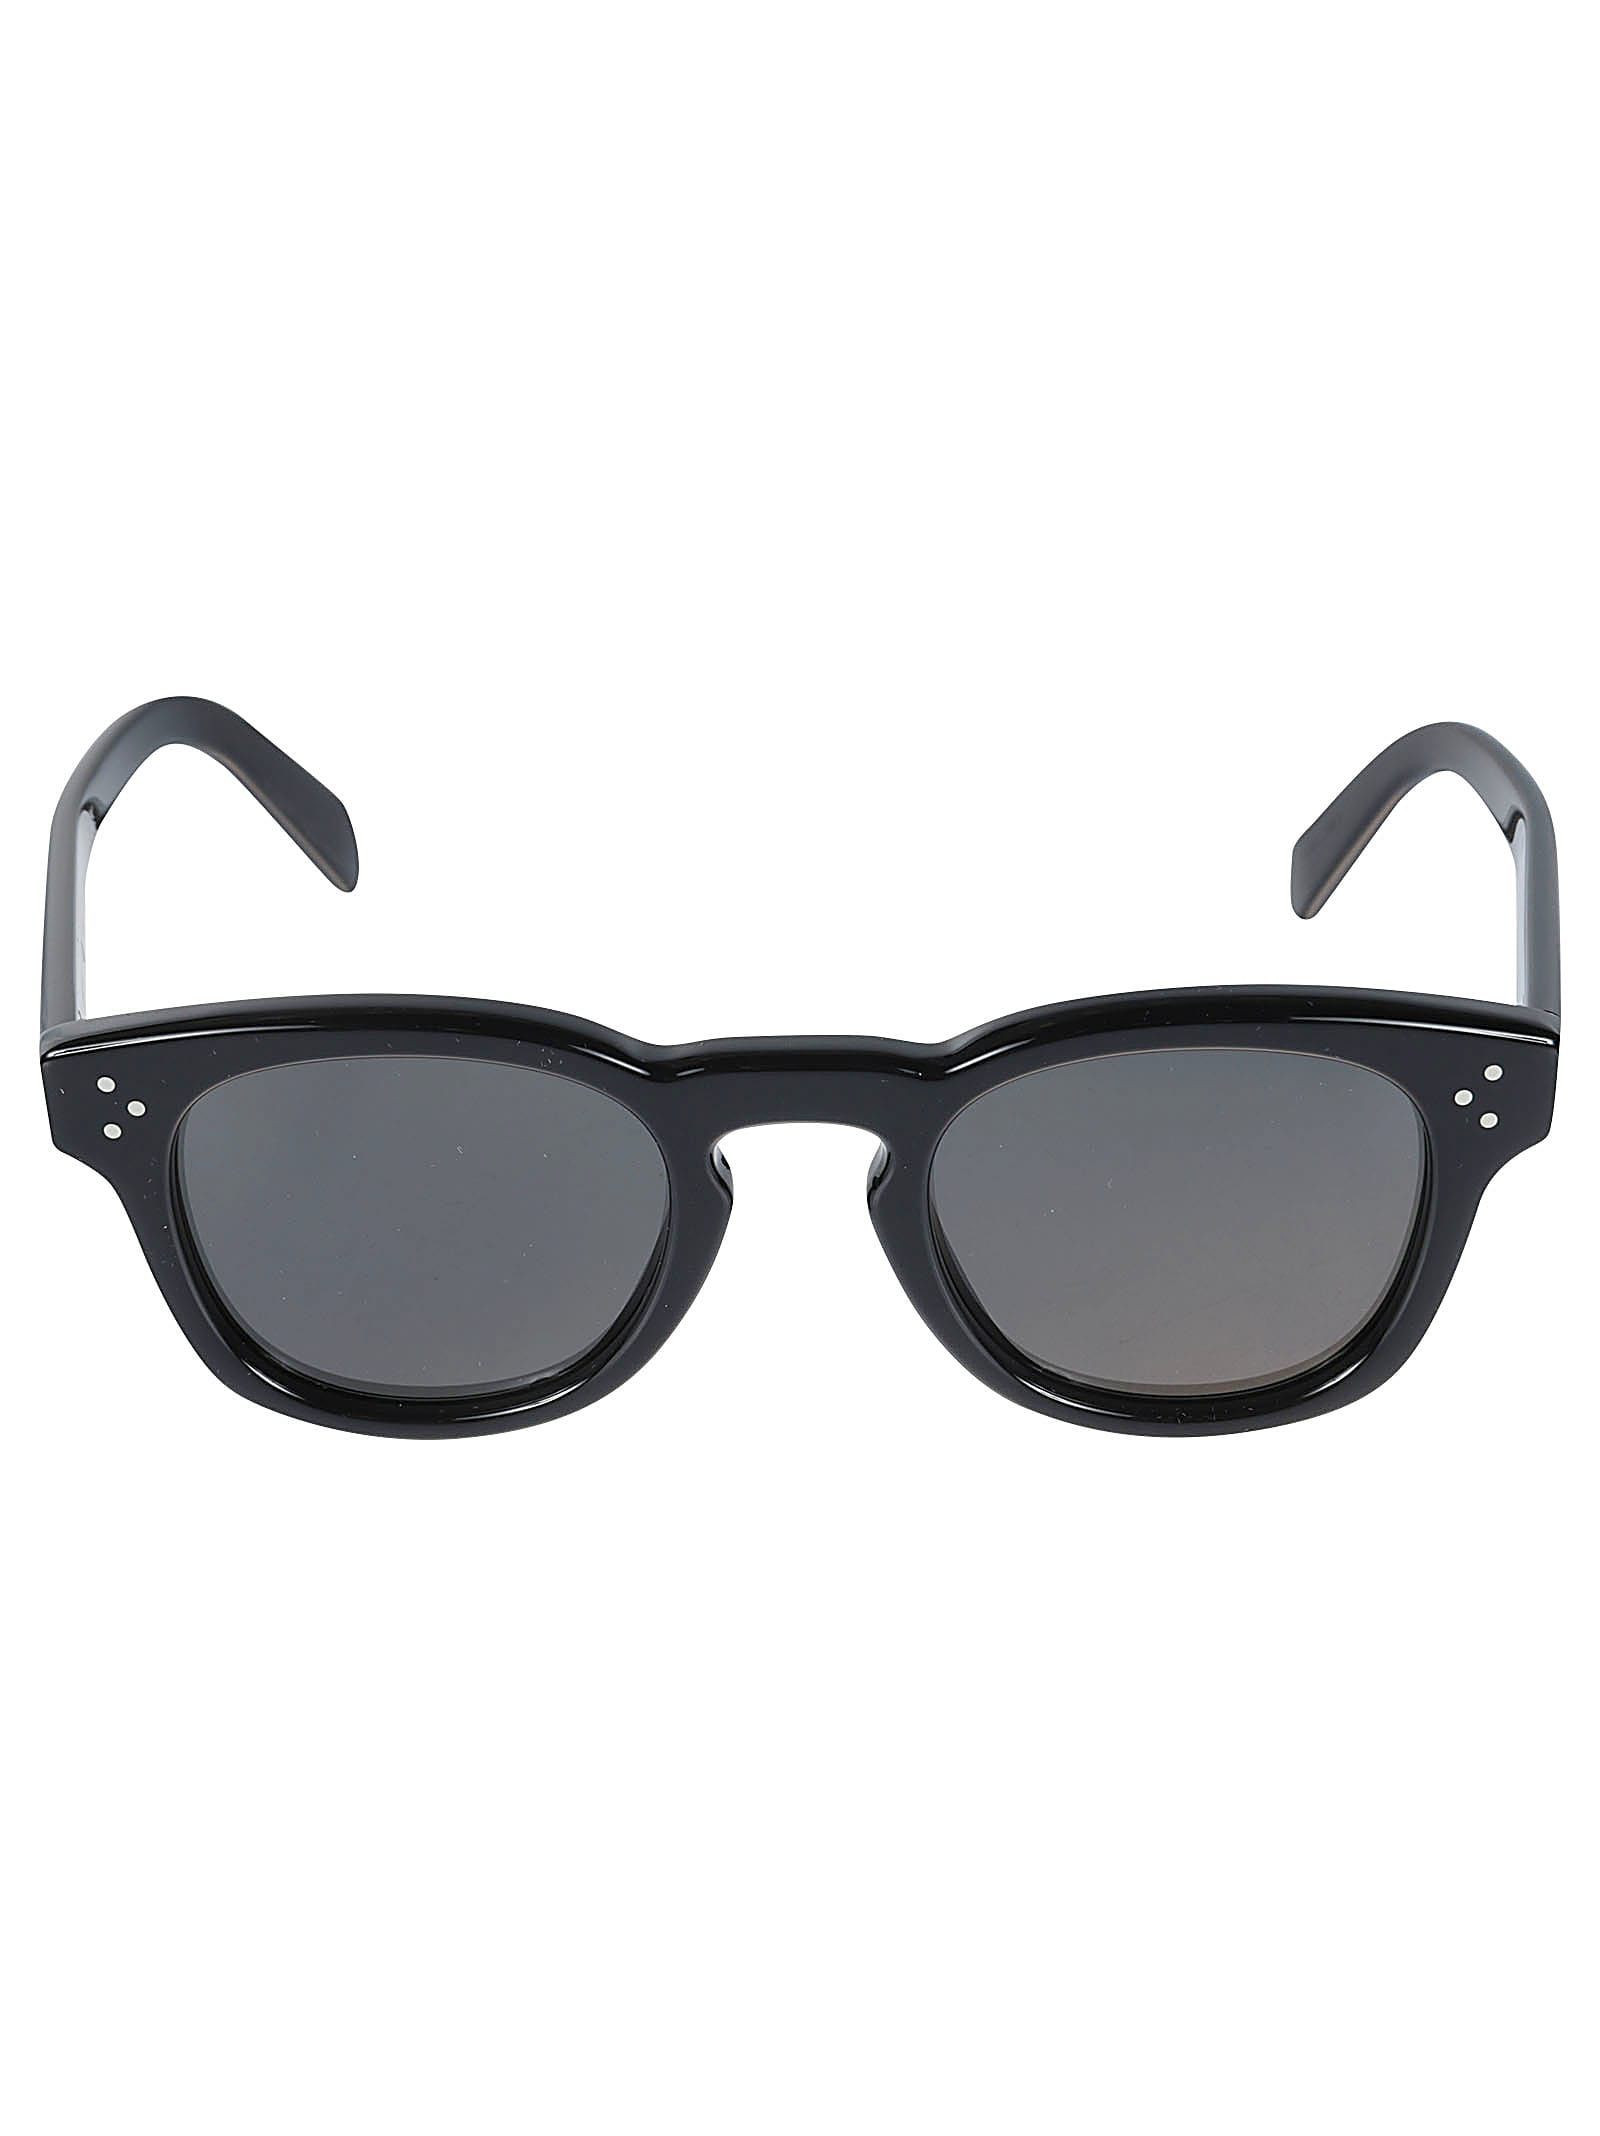 Celine Retro Square Sunglasses In Shiny Black / Smoke